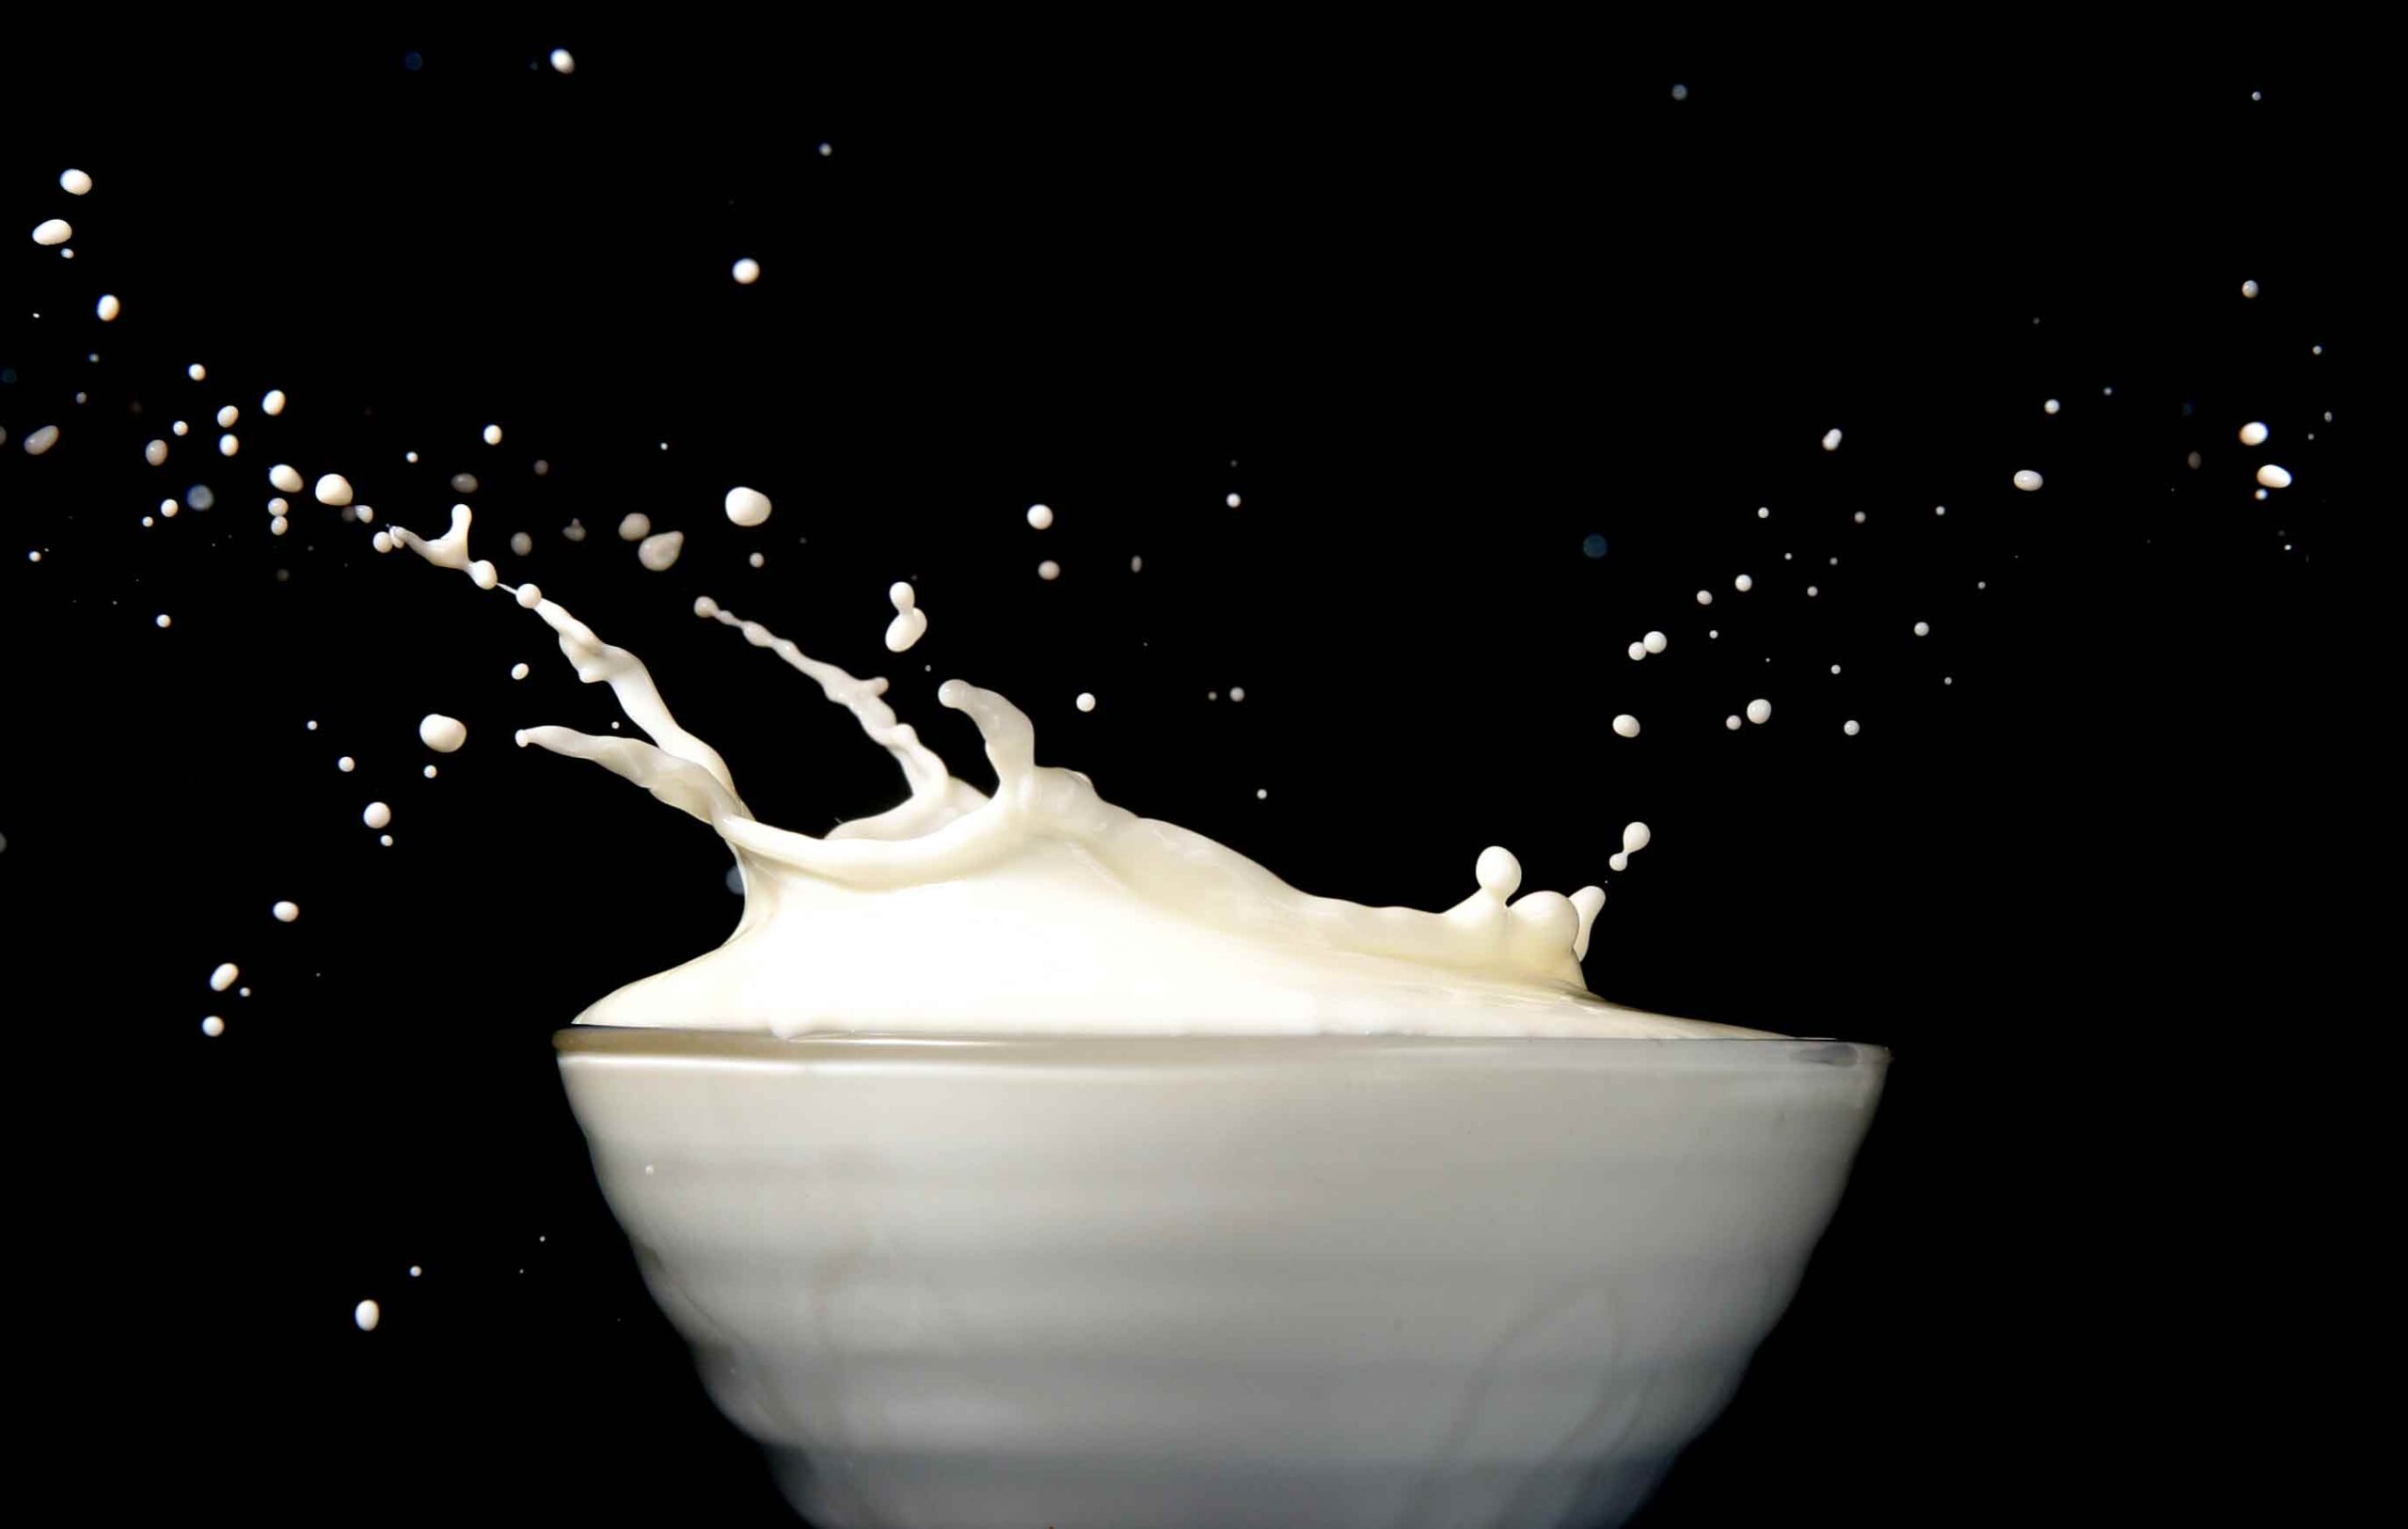 A bowl of milk splashing droplets.